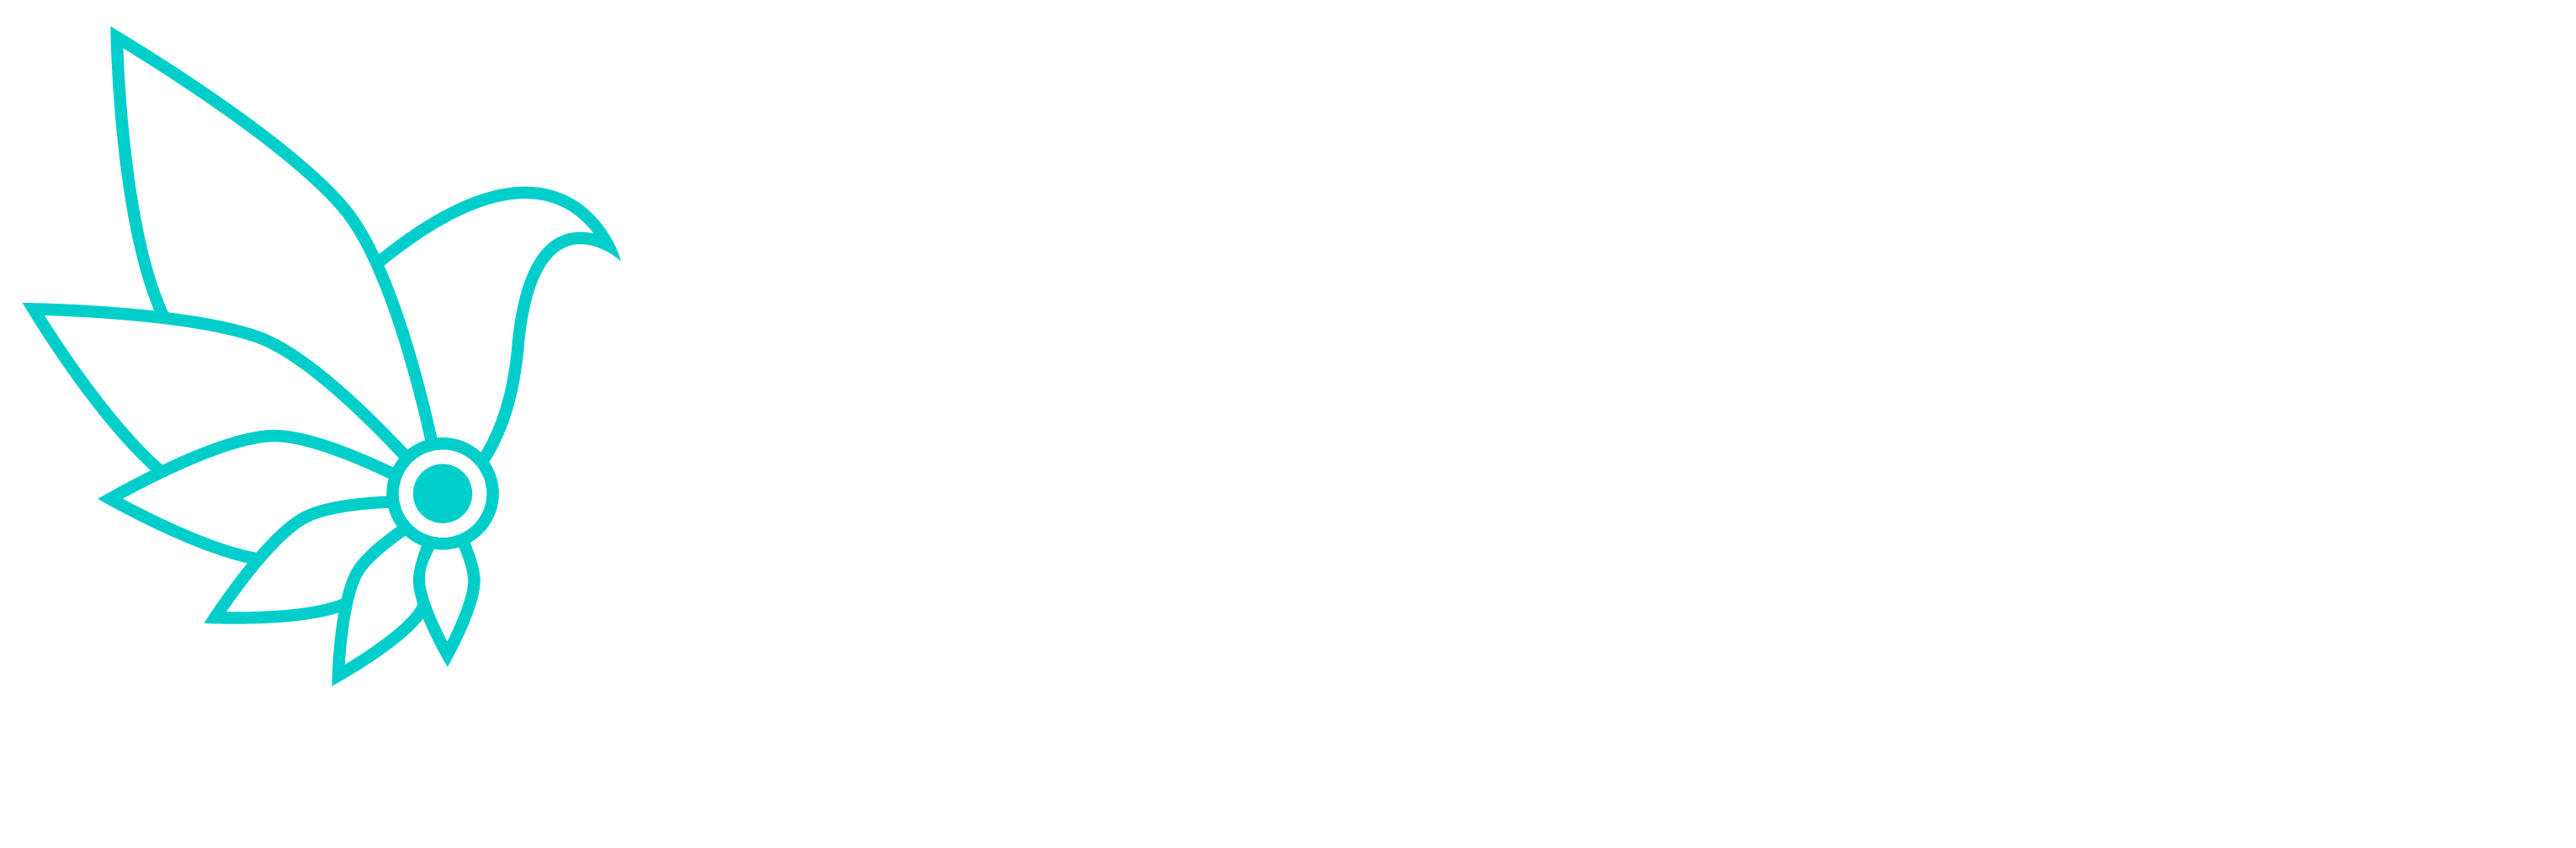 Greensource-logo-White-green-flower